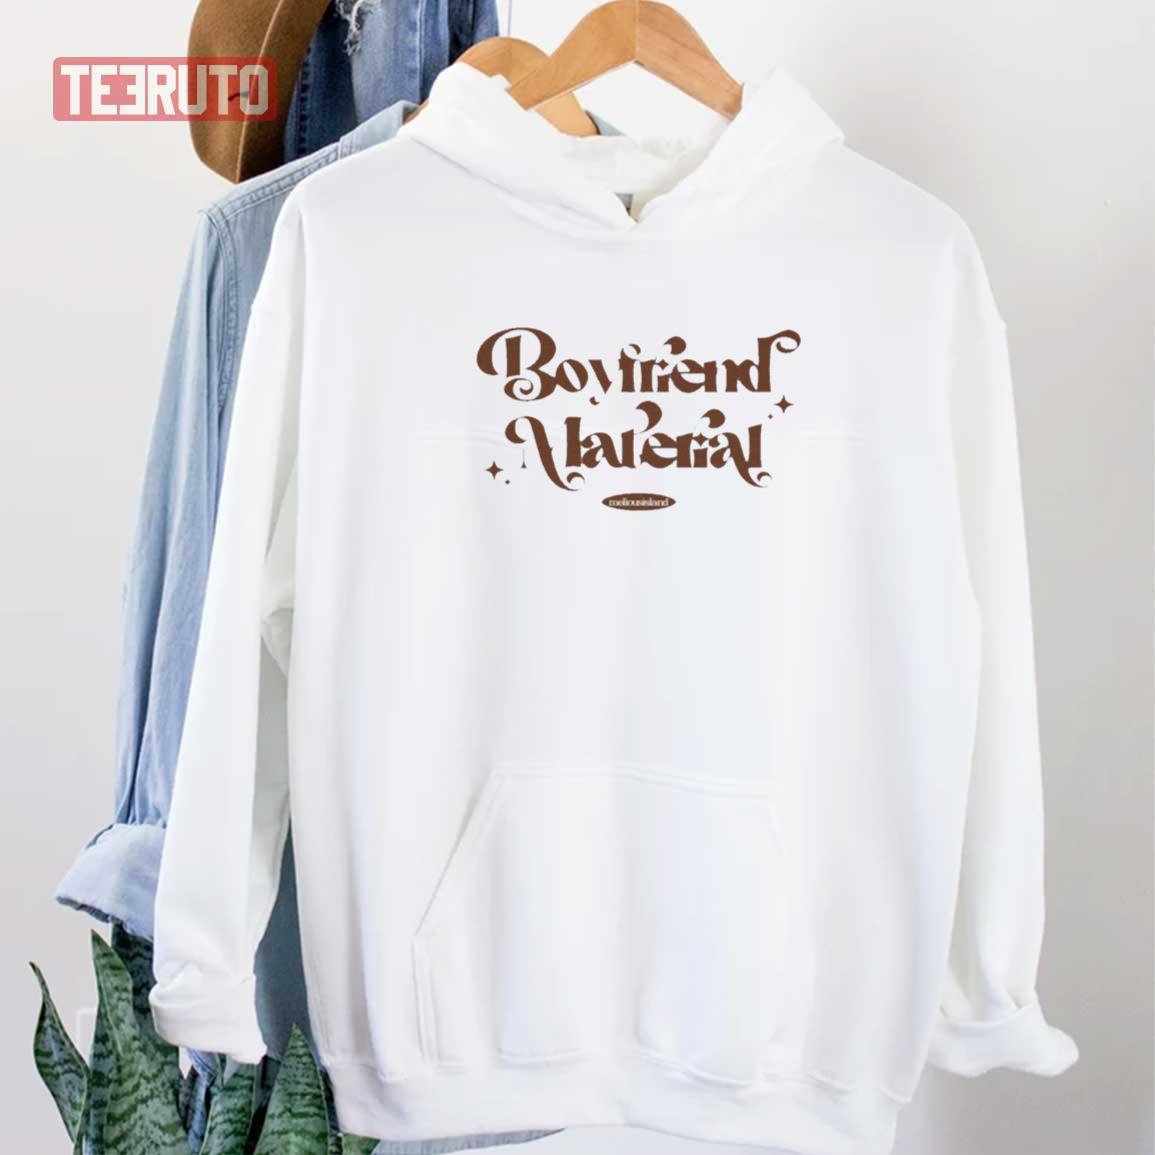 Boyfriend Material Y2k Logo 90s-2000s Couple Retro Vintage Unisex Sweatshirt Unisex T-Shirt